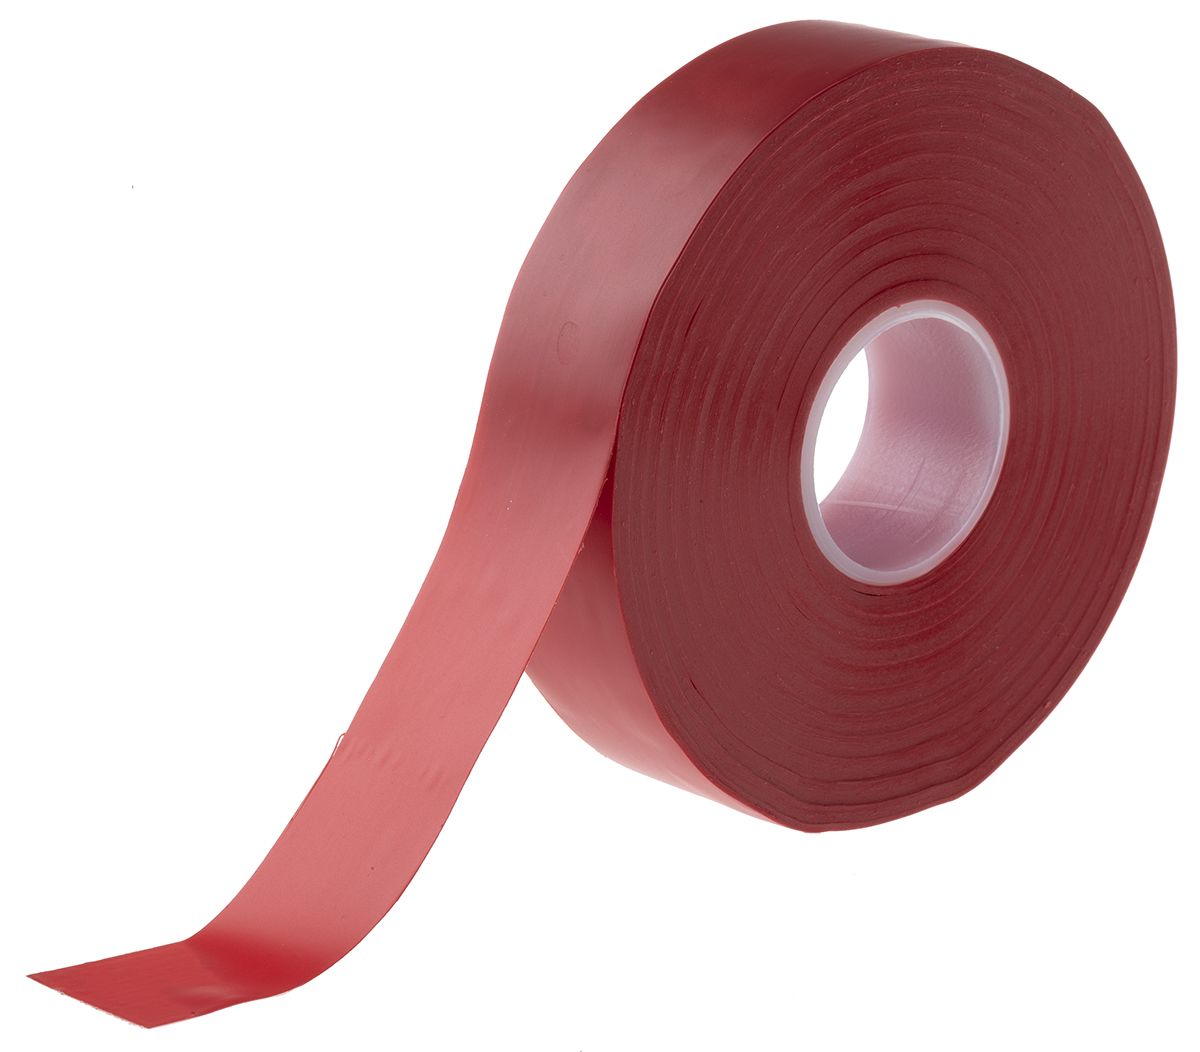 Cinta aislante de PVC Advance Tapes AT7 de color Rojo, 19mm x 33m, grosor 0.13mm